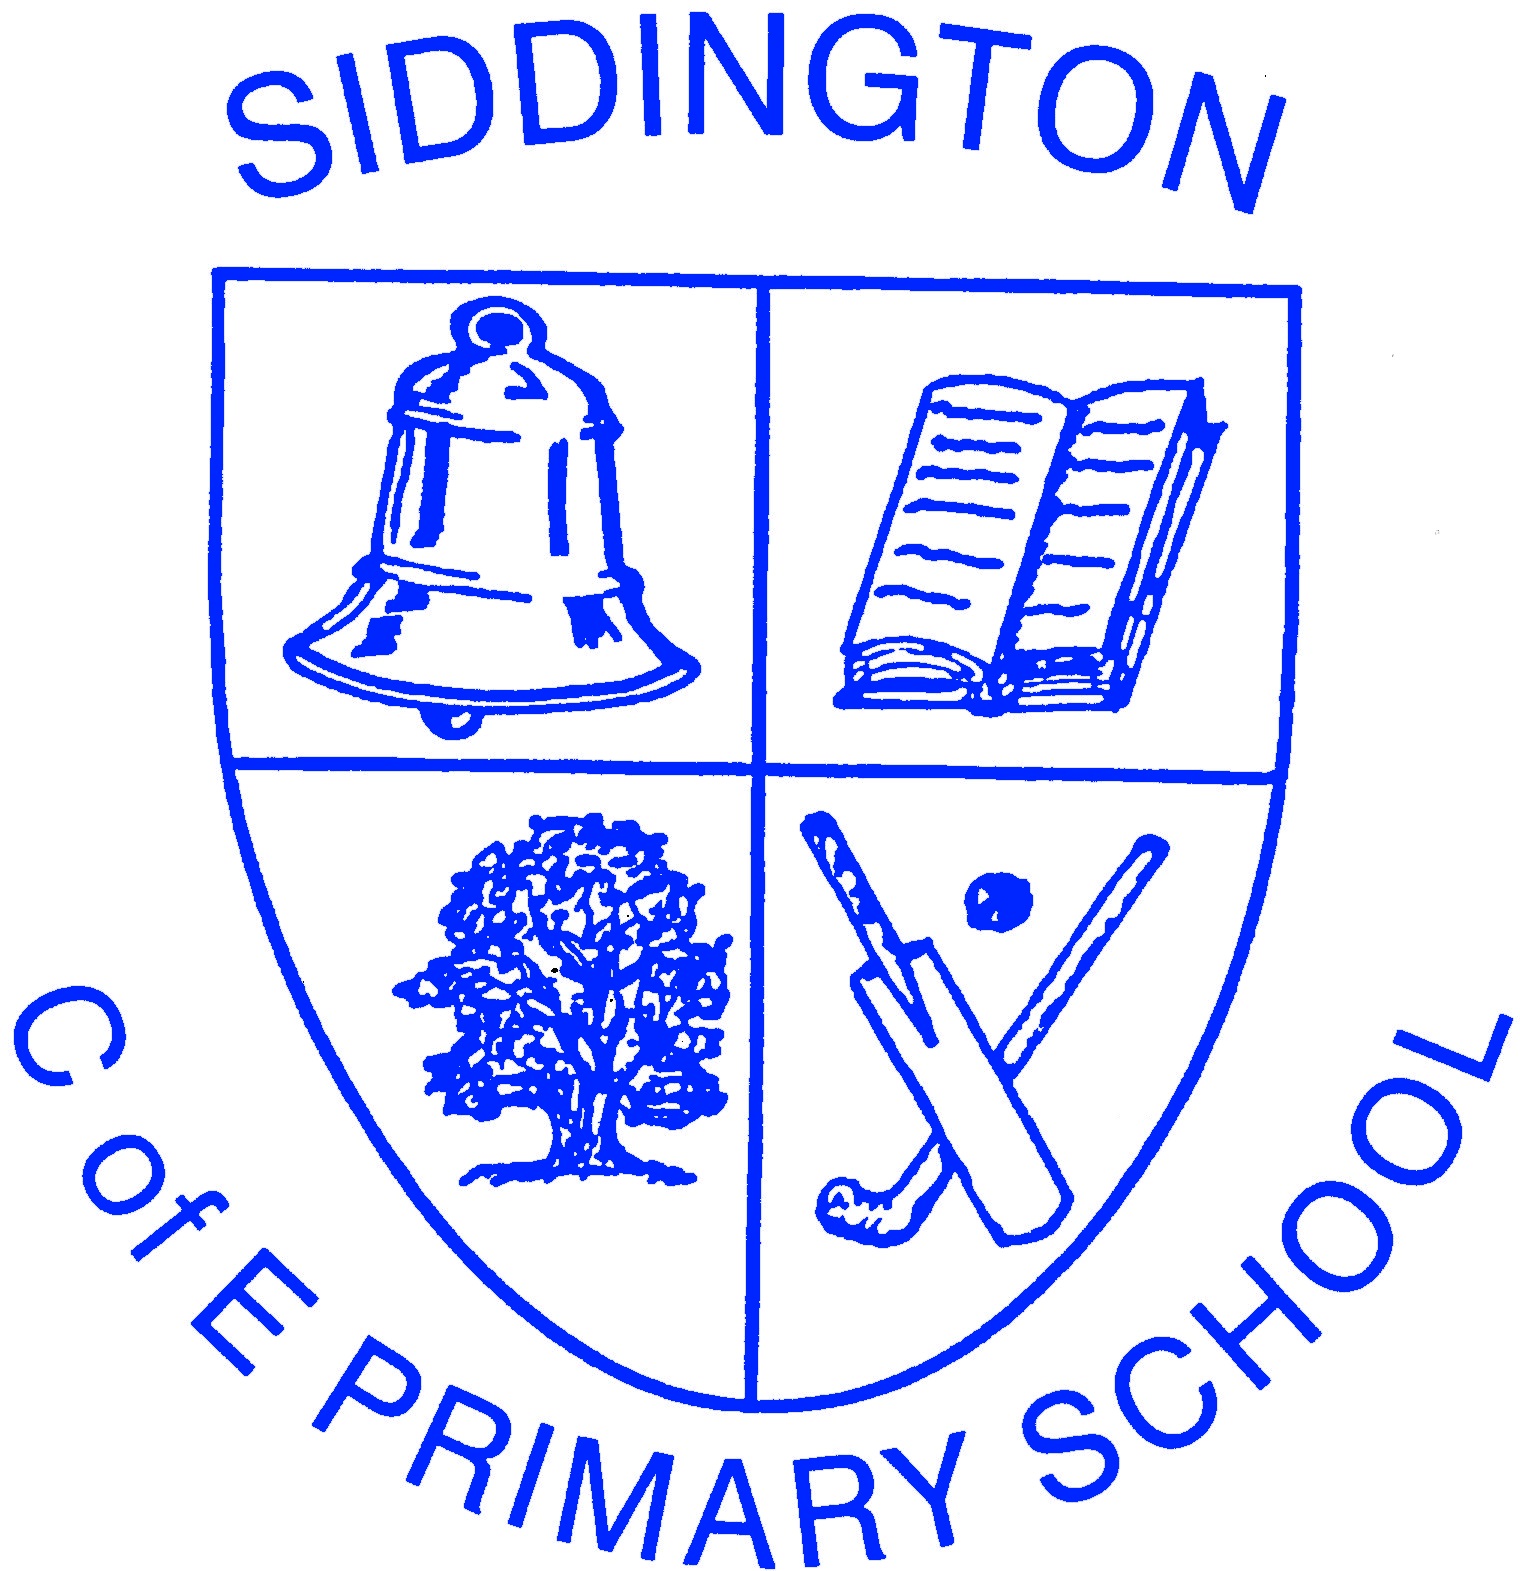 Siddington Primary School